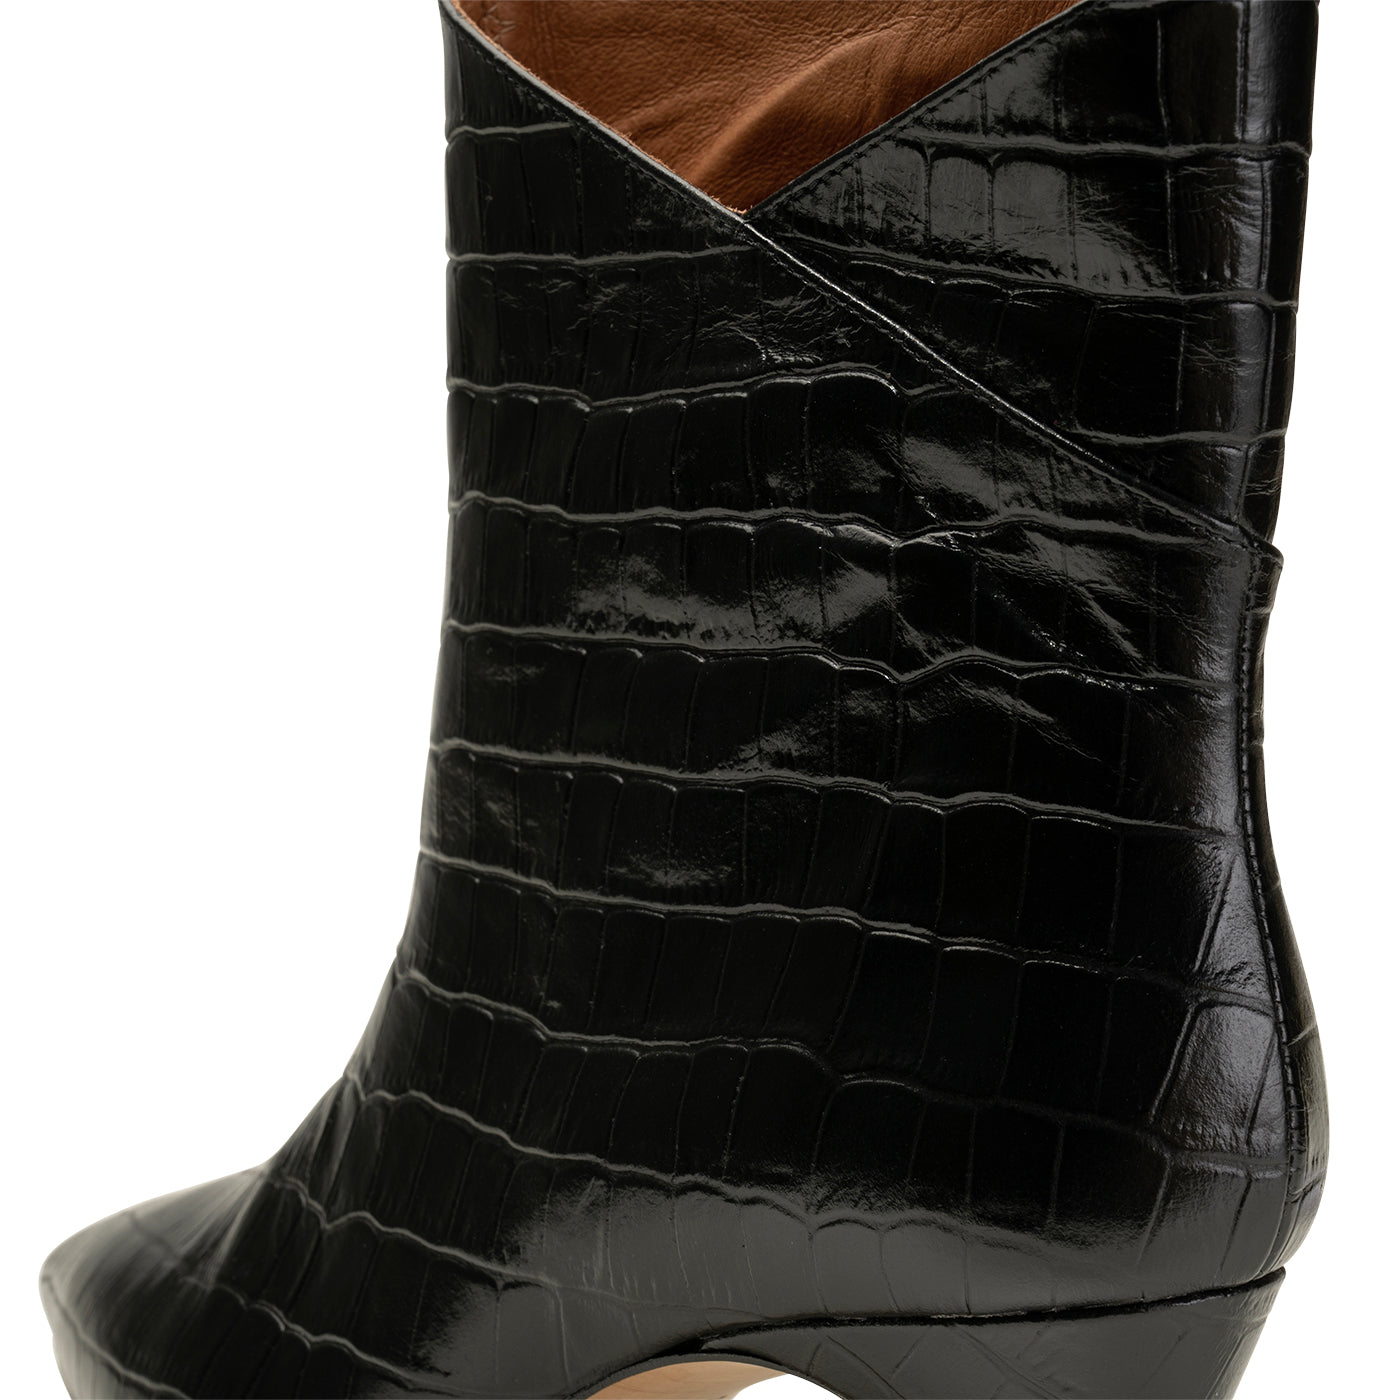 SHOE THE BEAR WOMENS Paula støvle læder Ankle Boots 112 BLACK CROCO